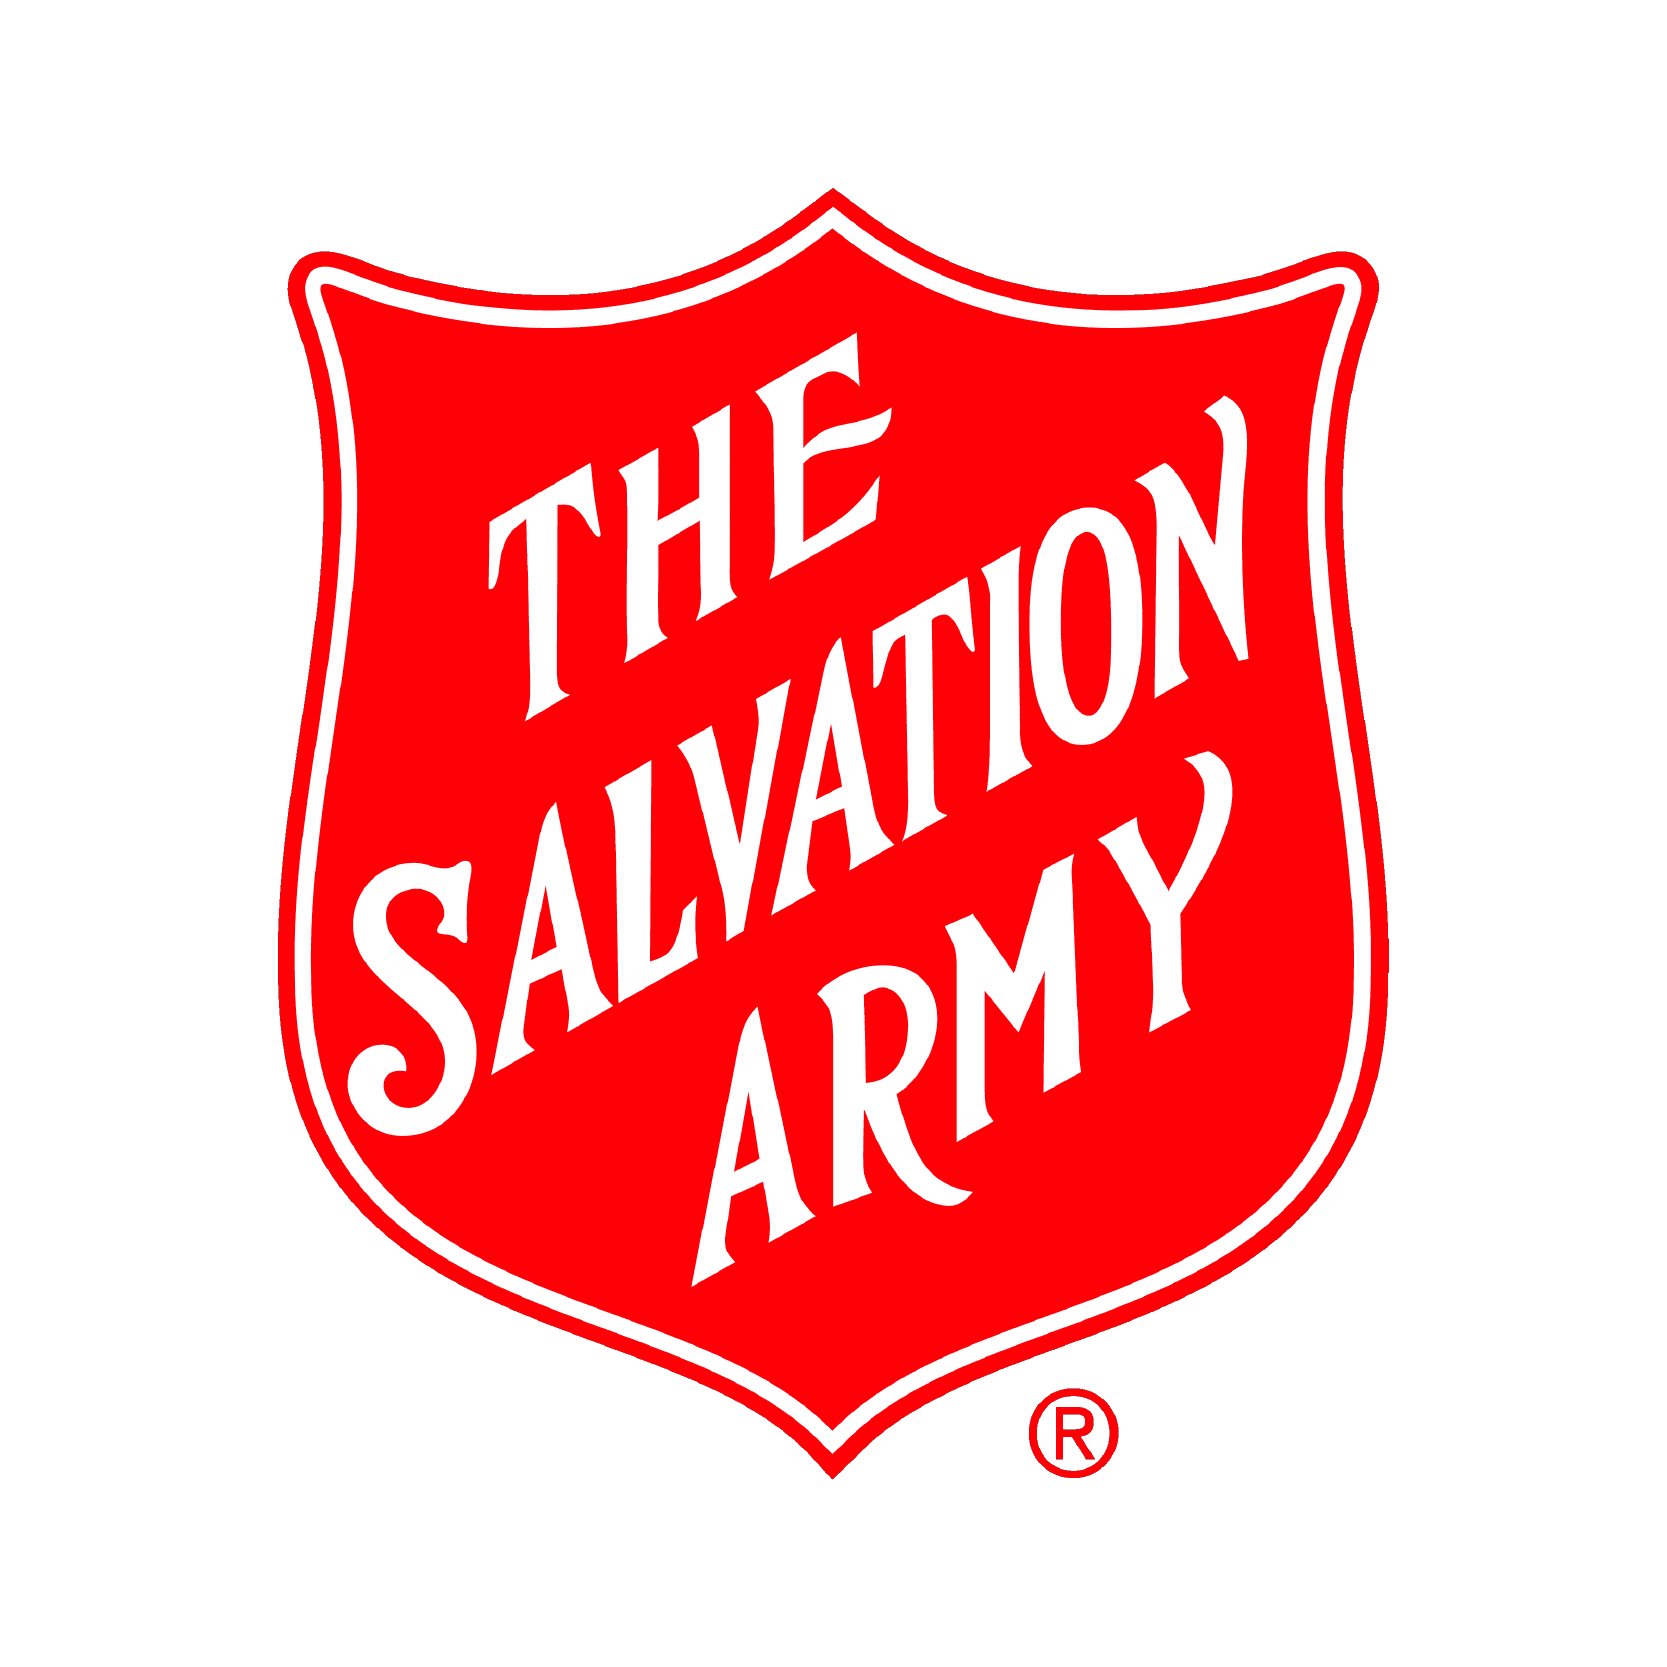 Salvation Army logo